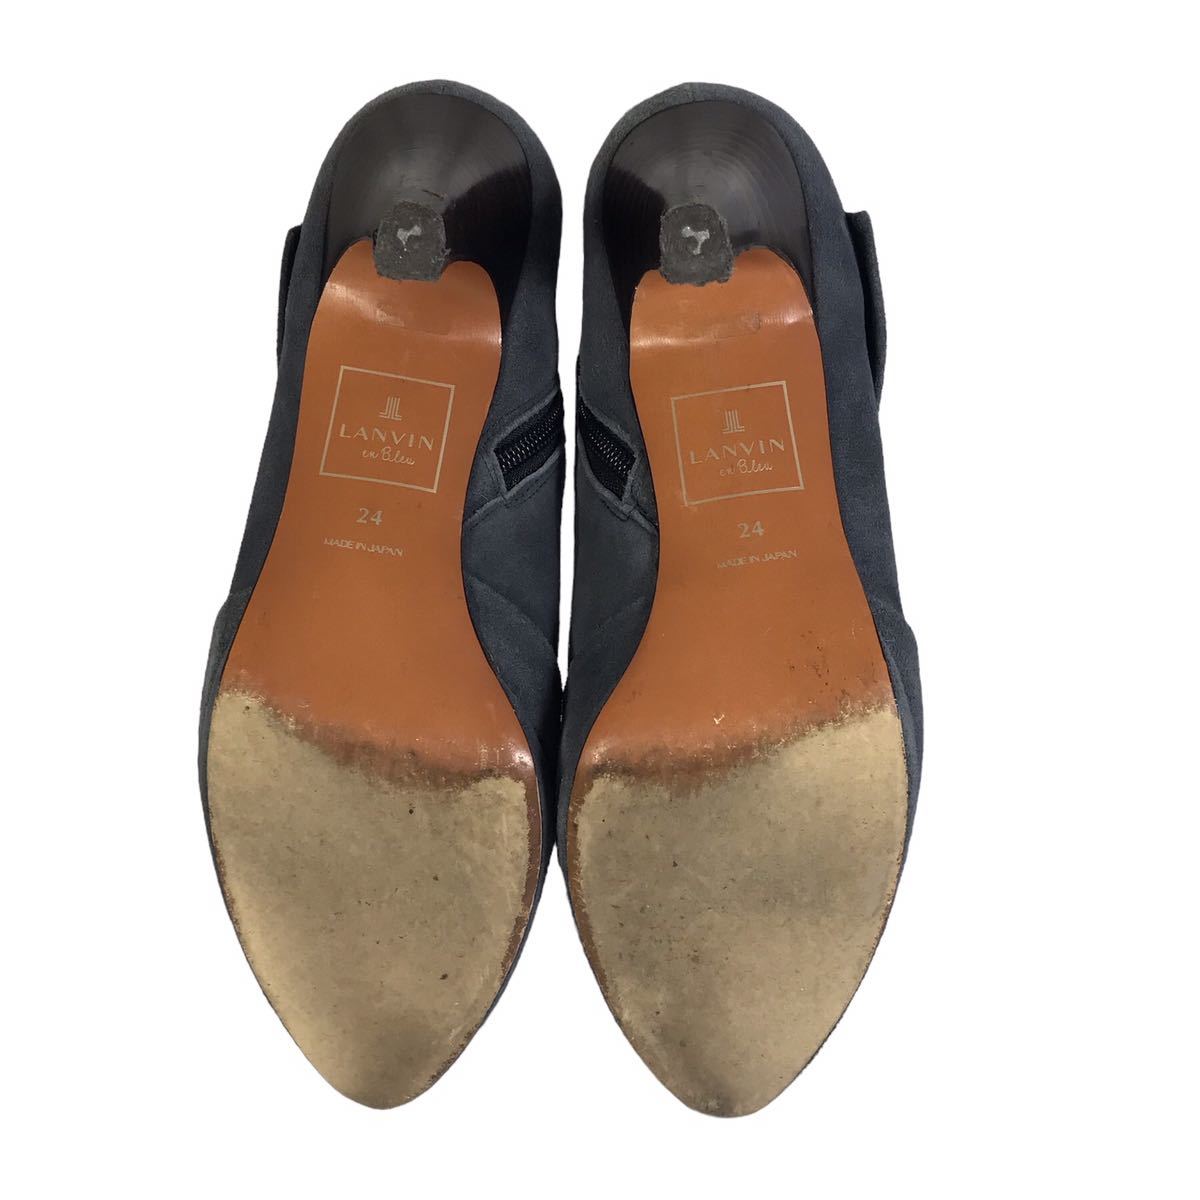 [LANVIN] замша высокий каблук ботинки Lanvin короткие сапоги ботиночки -